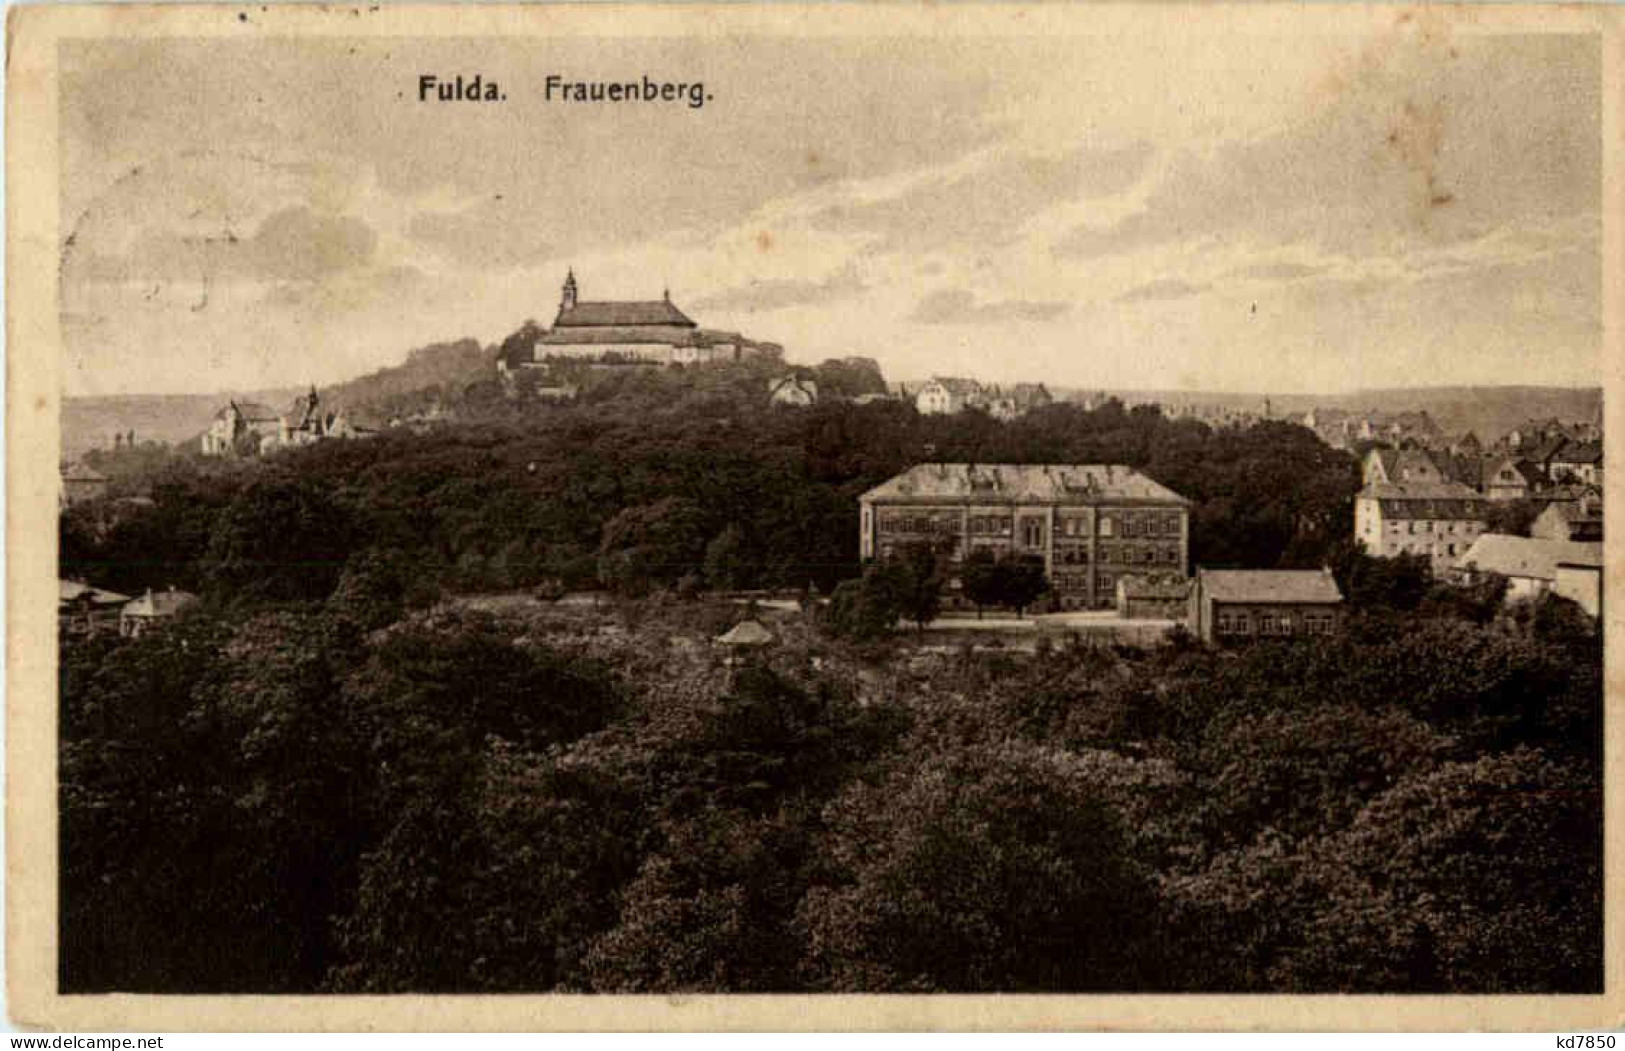 Fulda - Frauenberg - Fulda